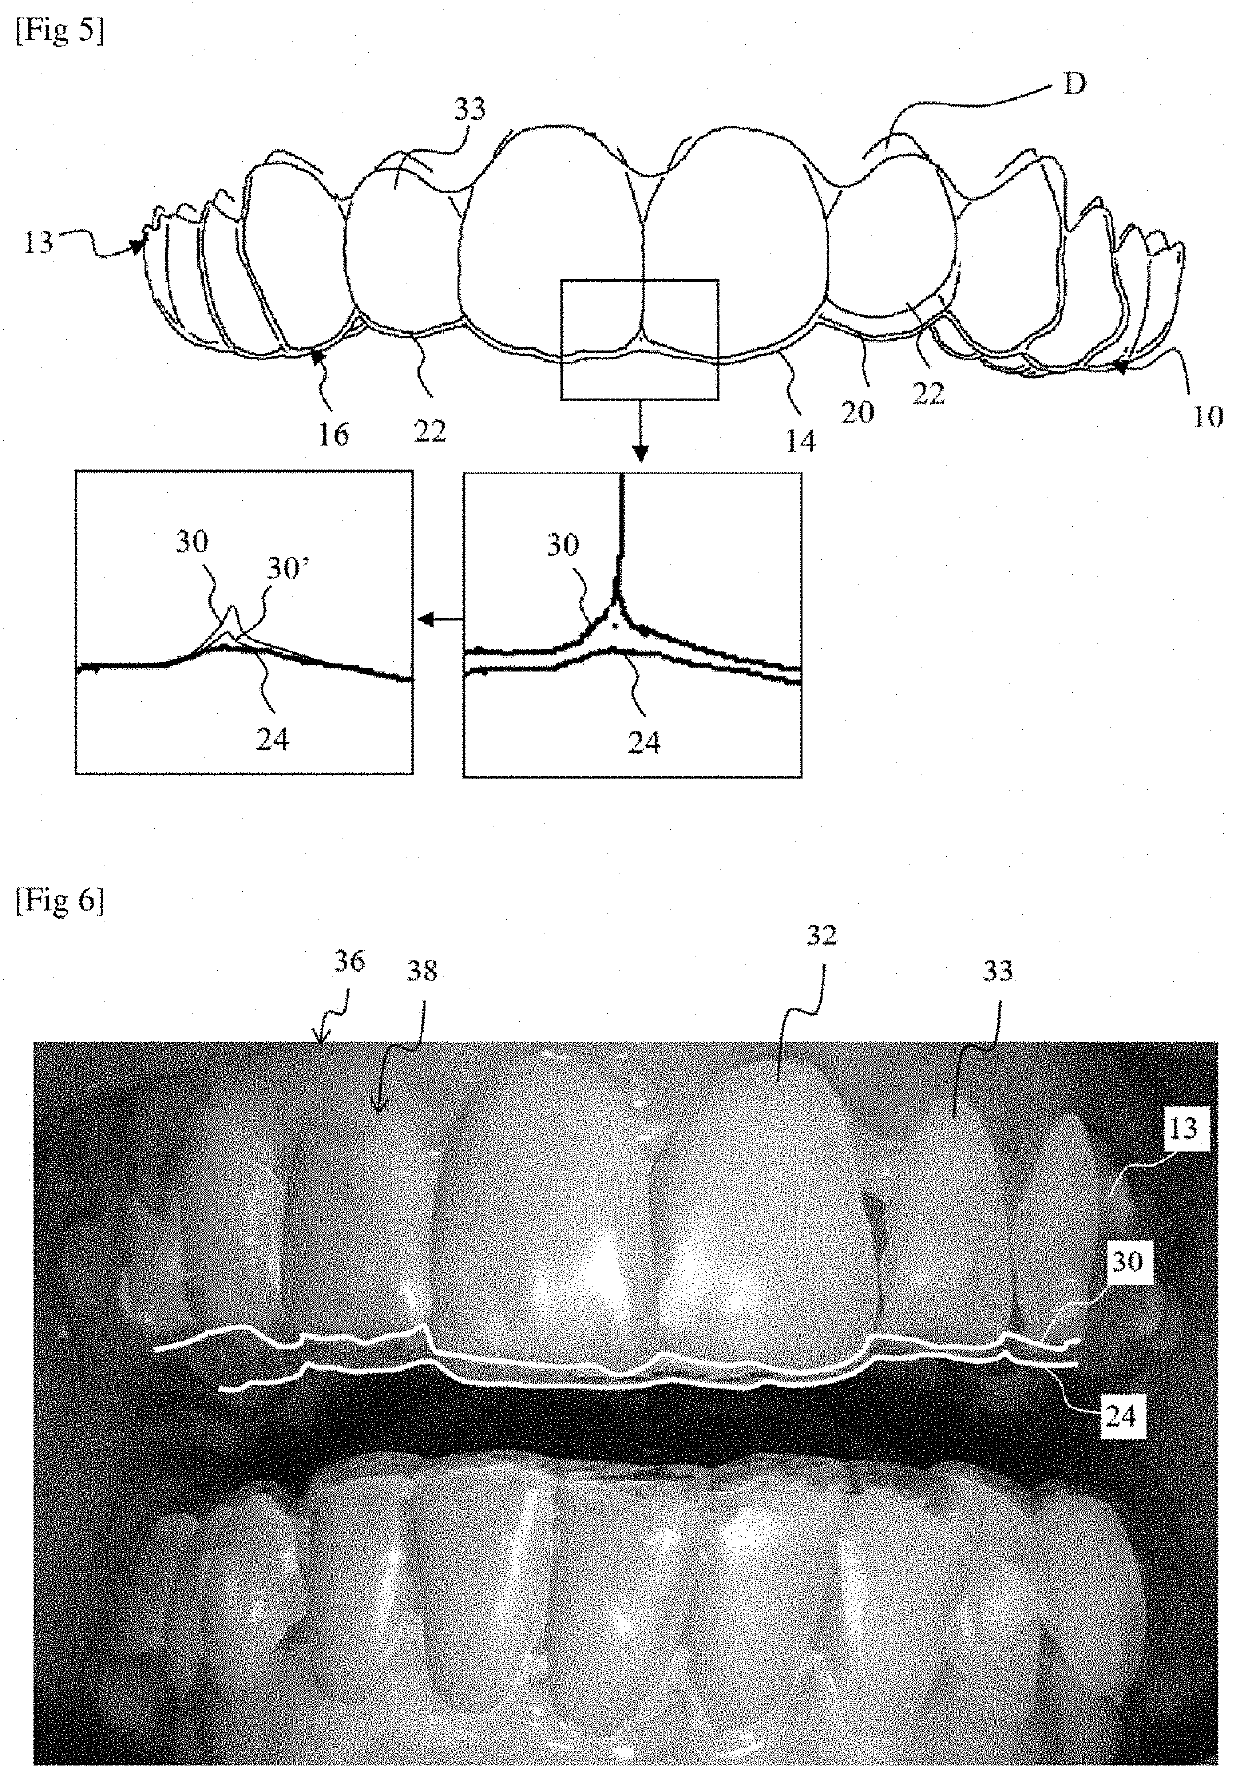 Method for evaluating an orthodontic aligner